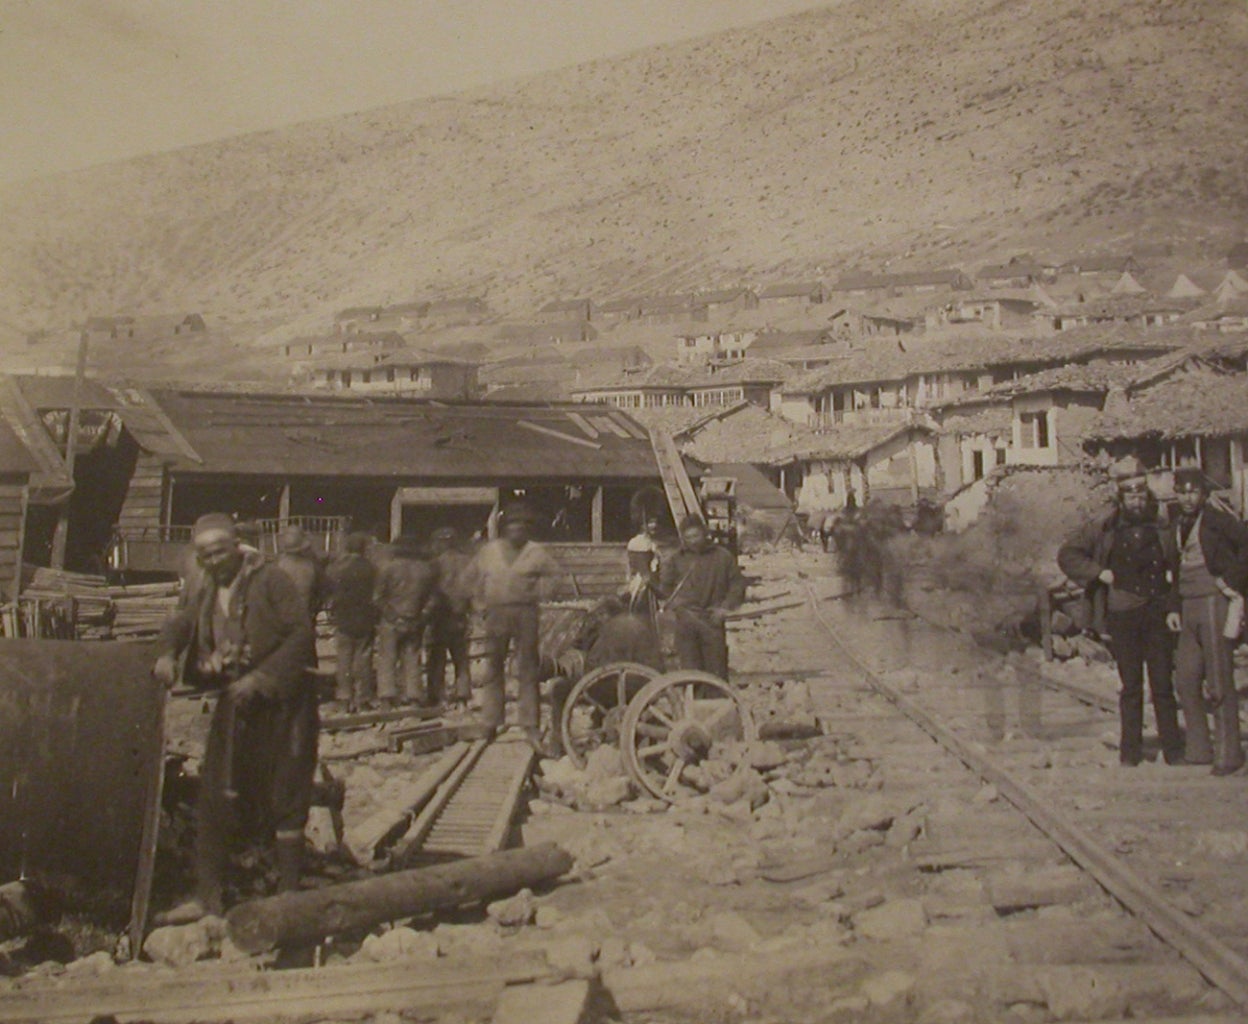 Roger Fenton Black and White Photograph - The Railway Yard, Balaklava